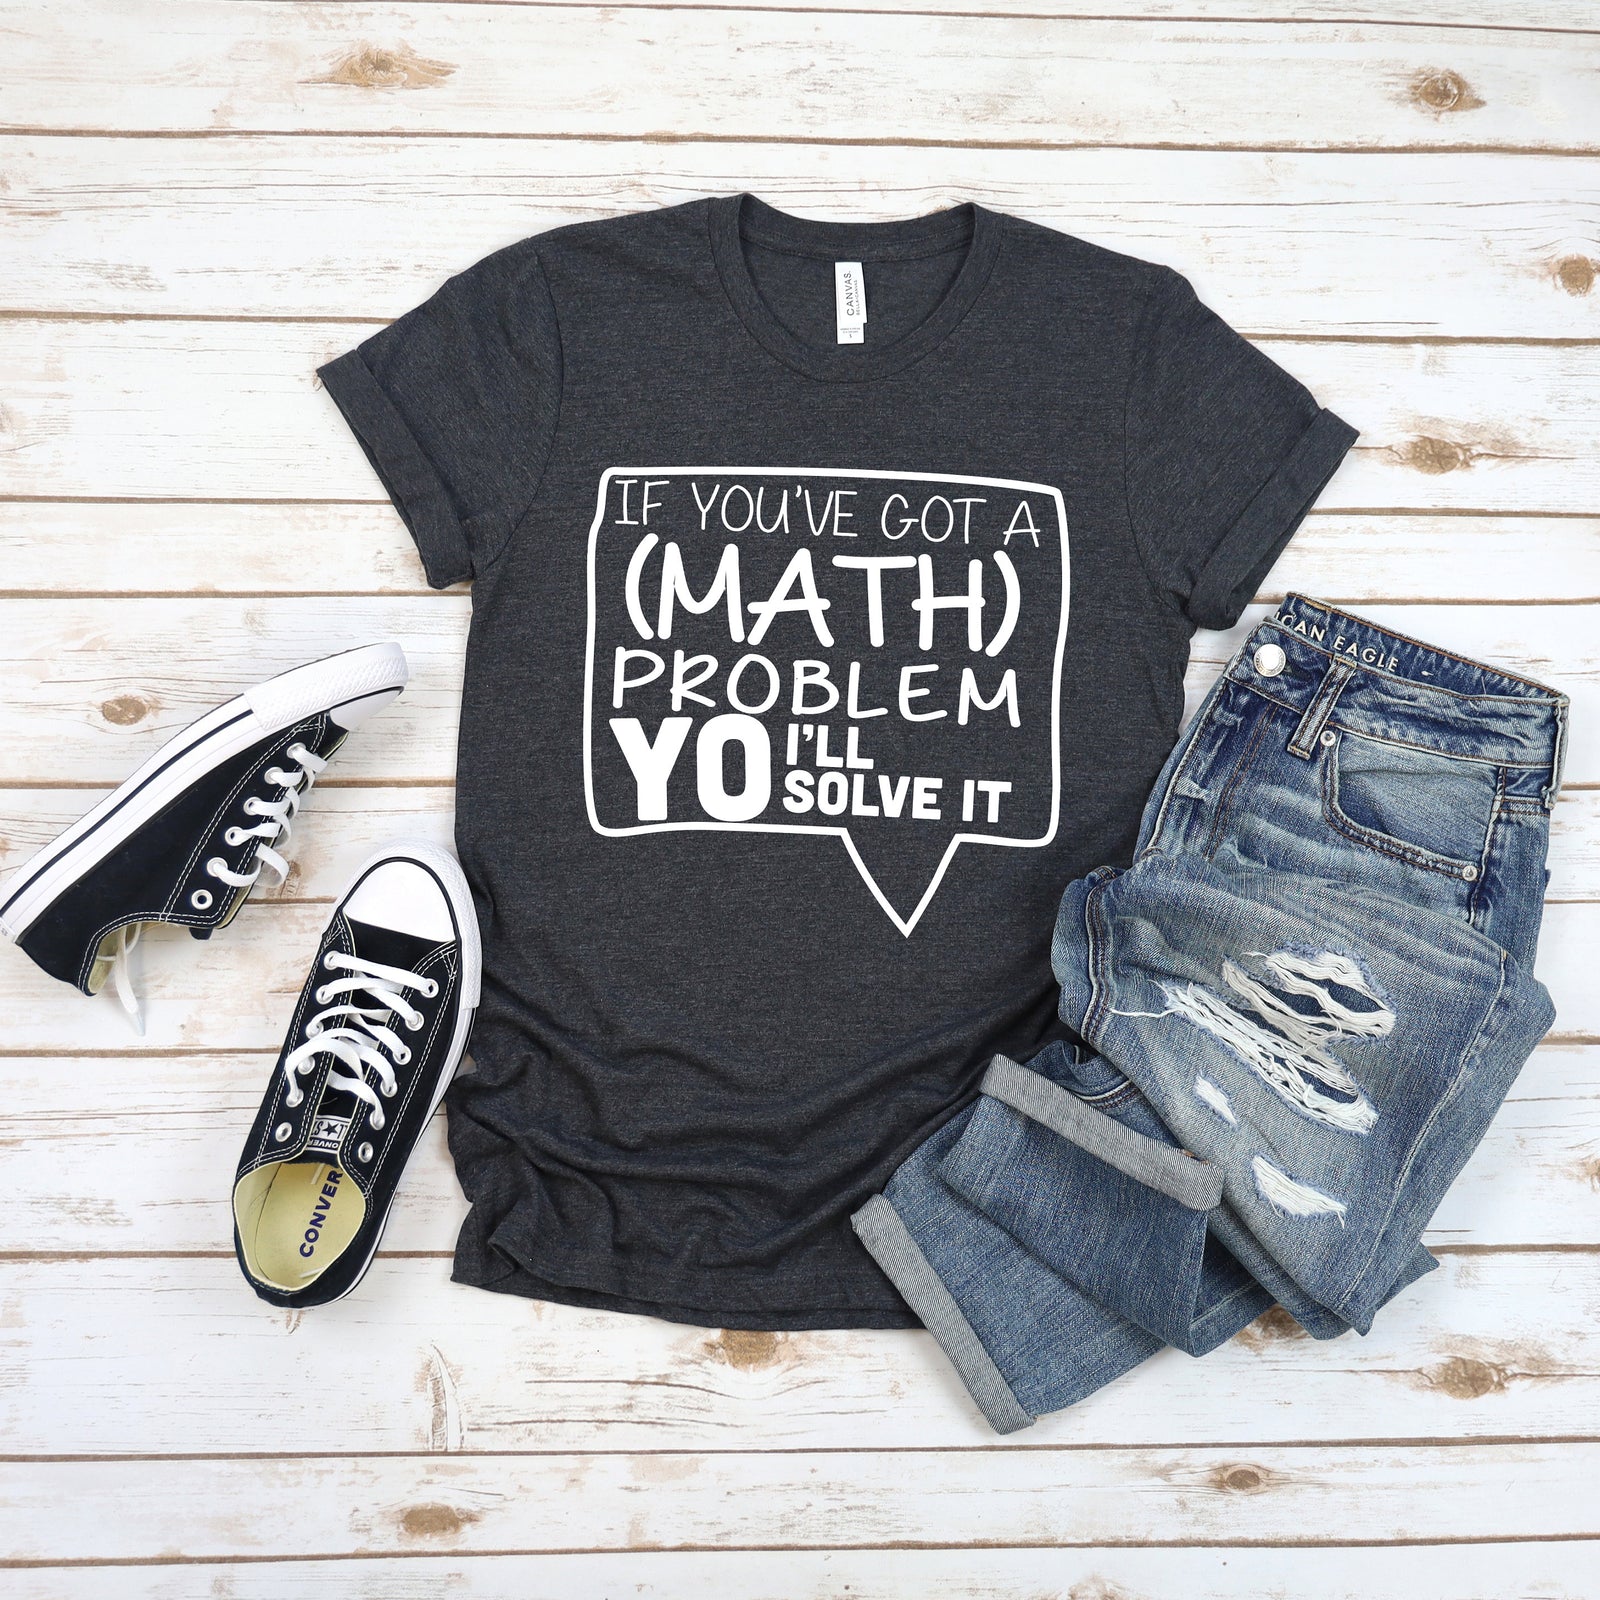 If You've Got A Math Problem Yo I'll Solve It - Adult Unisex T Shirt - Math Teacher Shirt - School Shirt - Back to School